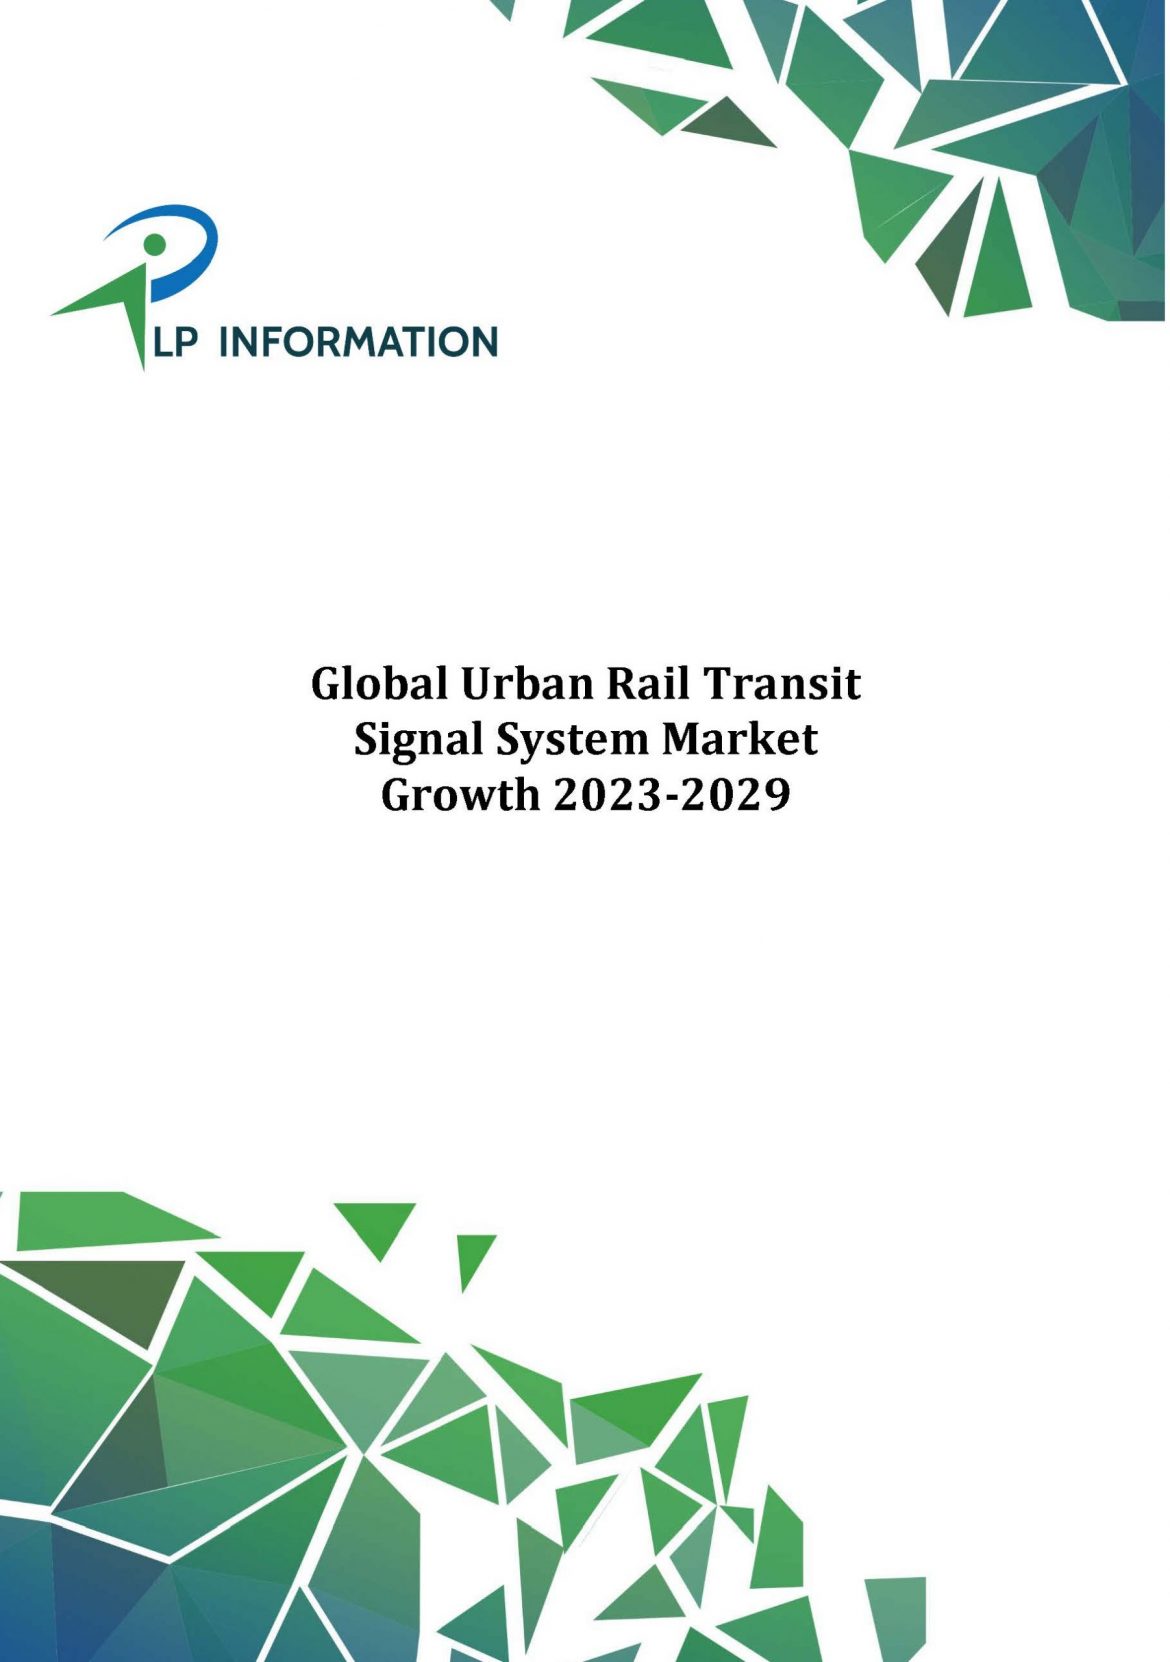 Global Urban Rail Transit Signal System Market Growth 2023-2029